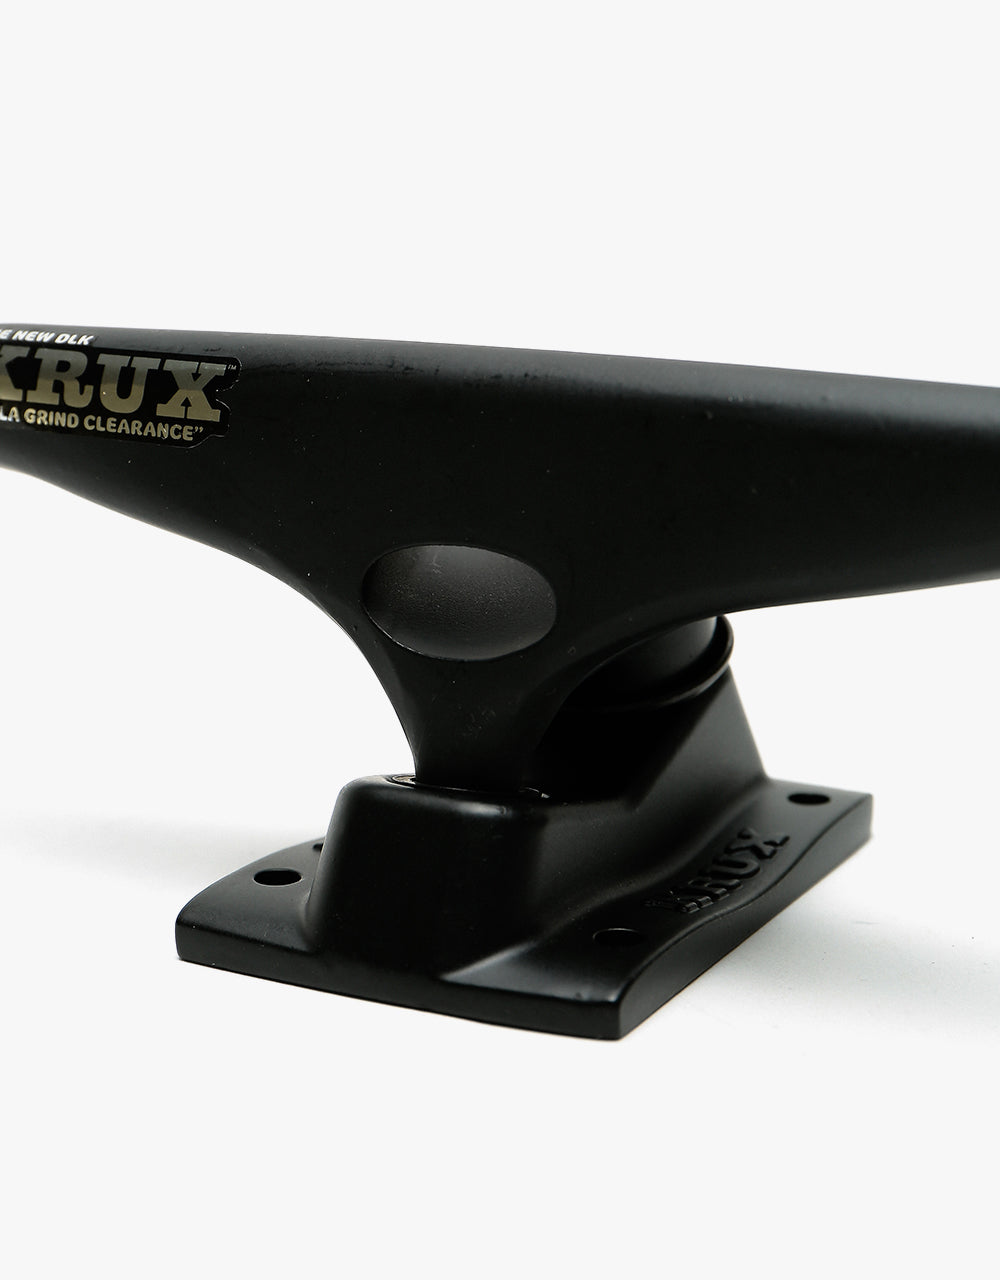 Krux Black Widow K5 DLK 8.25 Standard Skateboard Trucks Pair